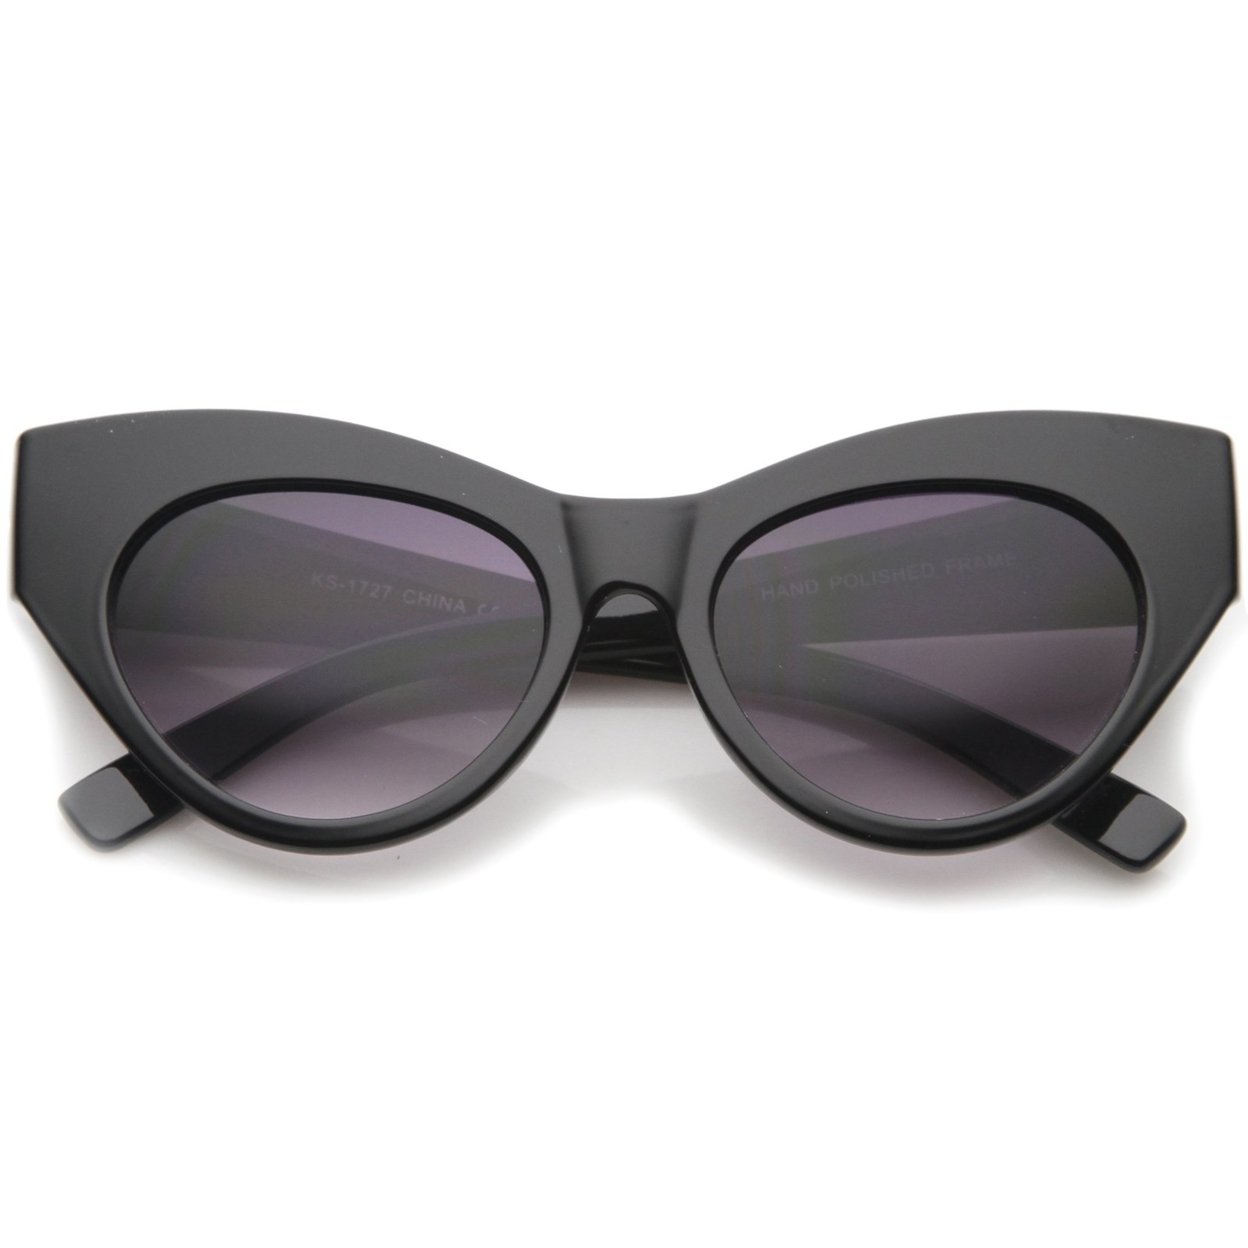 Womens High Fashion Chunky Frame Oversize Bold Cat Eye Sunglasses 57mm - Grey Marble / Lavender